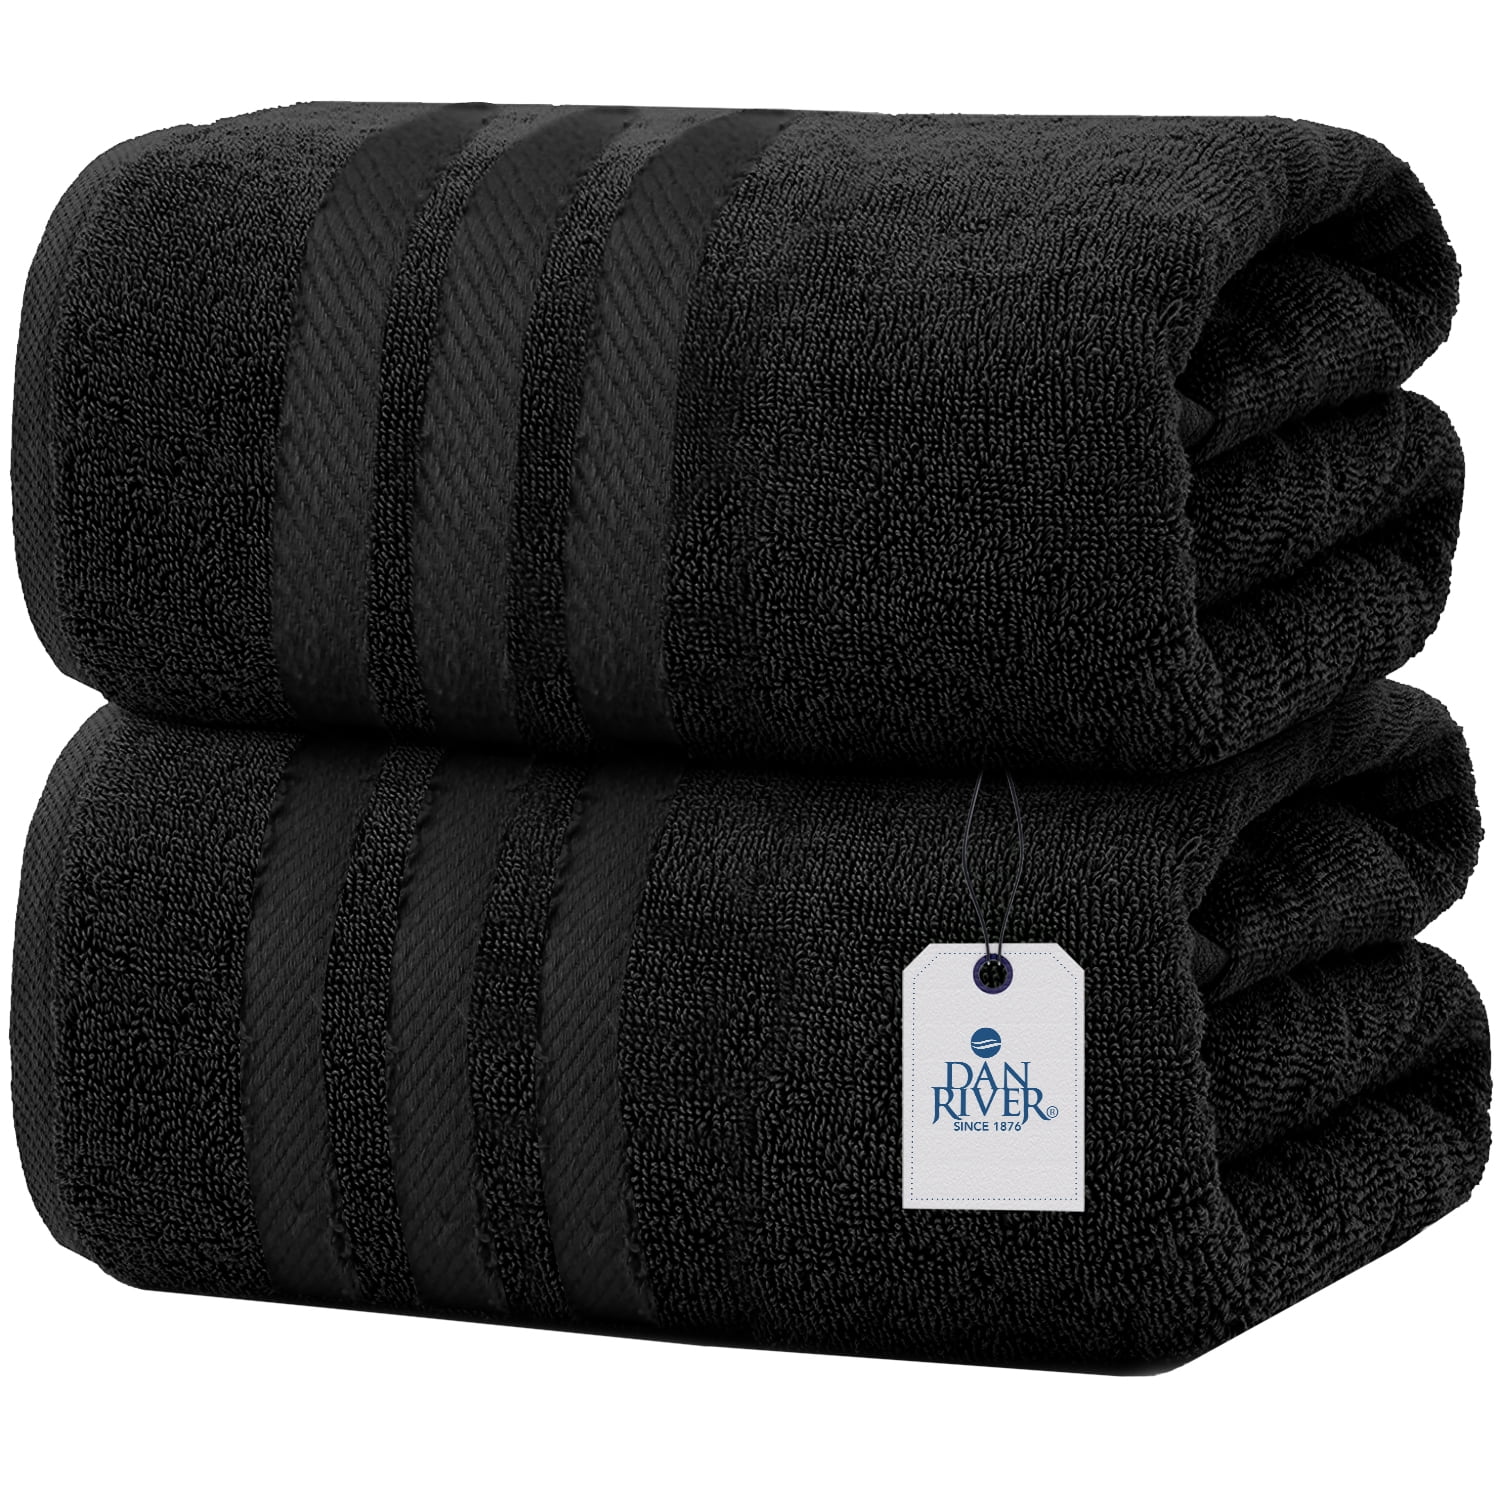 2-PK New MAX STUDIO Cotton KNITTED Soft Kitchen Towels Black, Gray